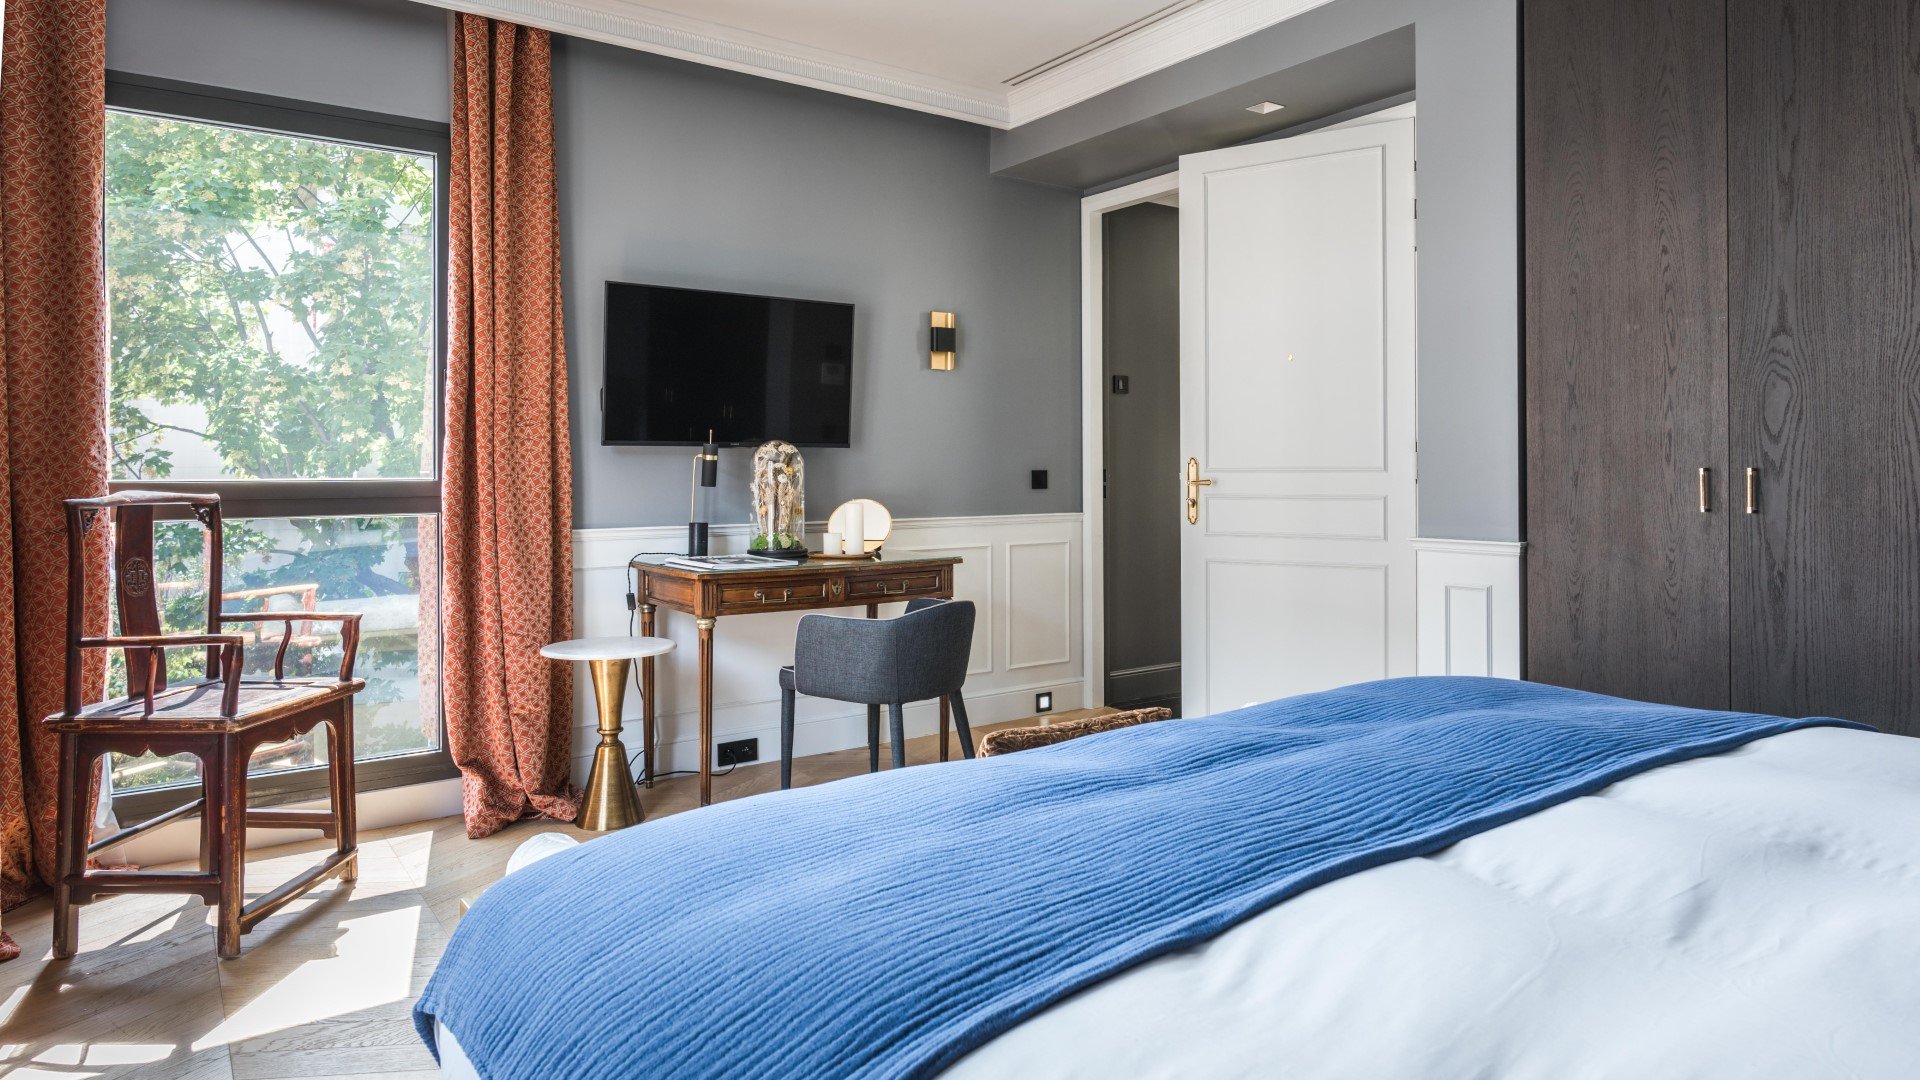 Homanie Paris Mandel bedroom de luxe